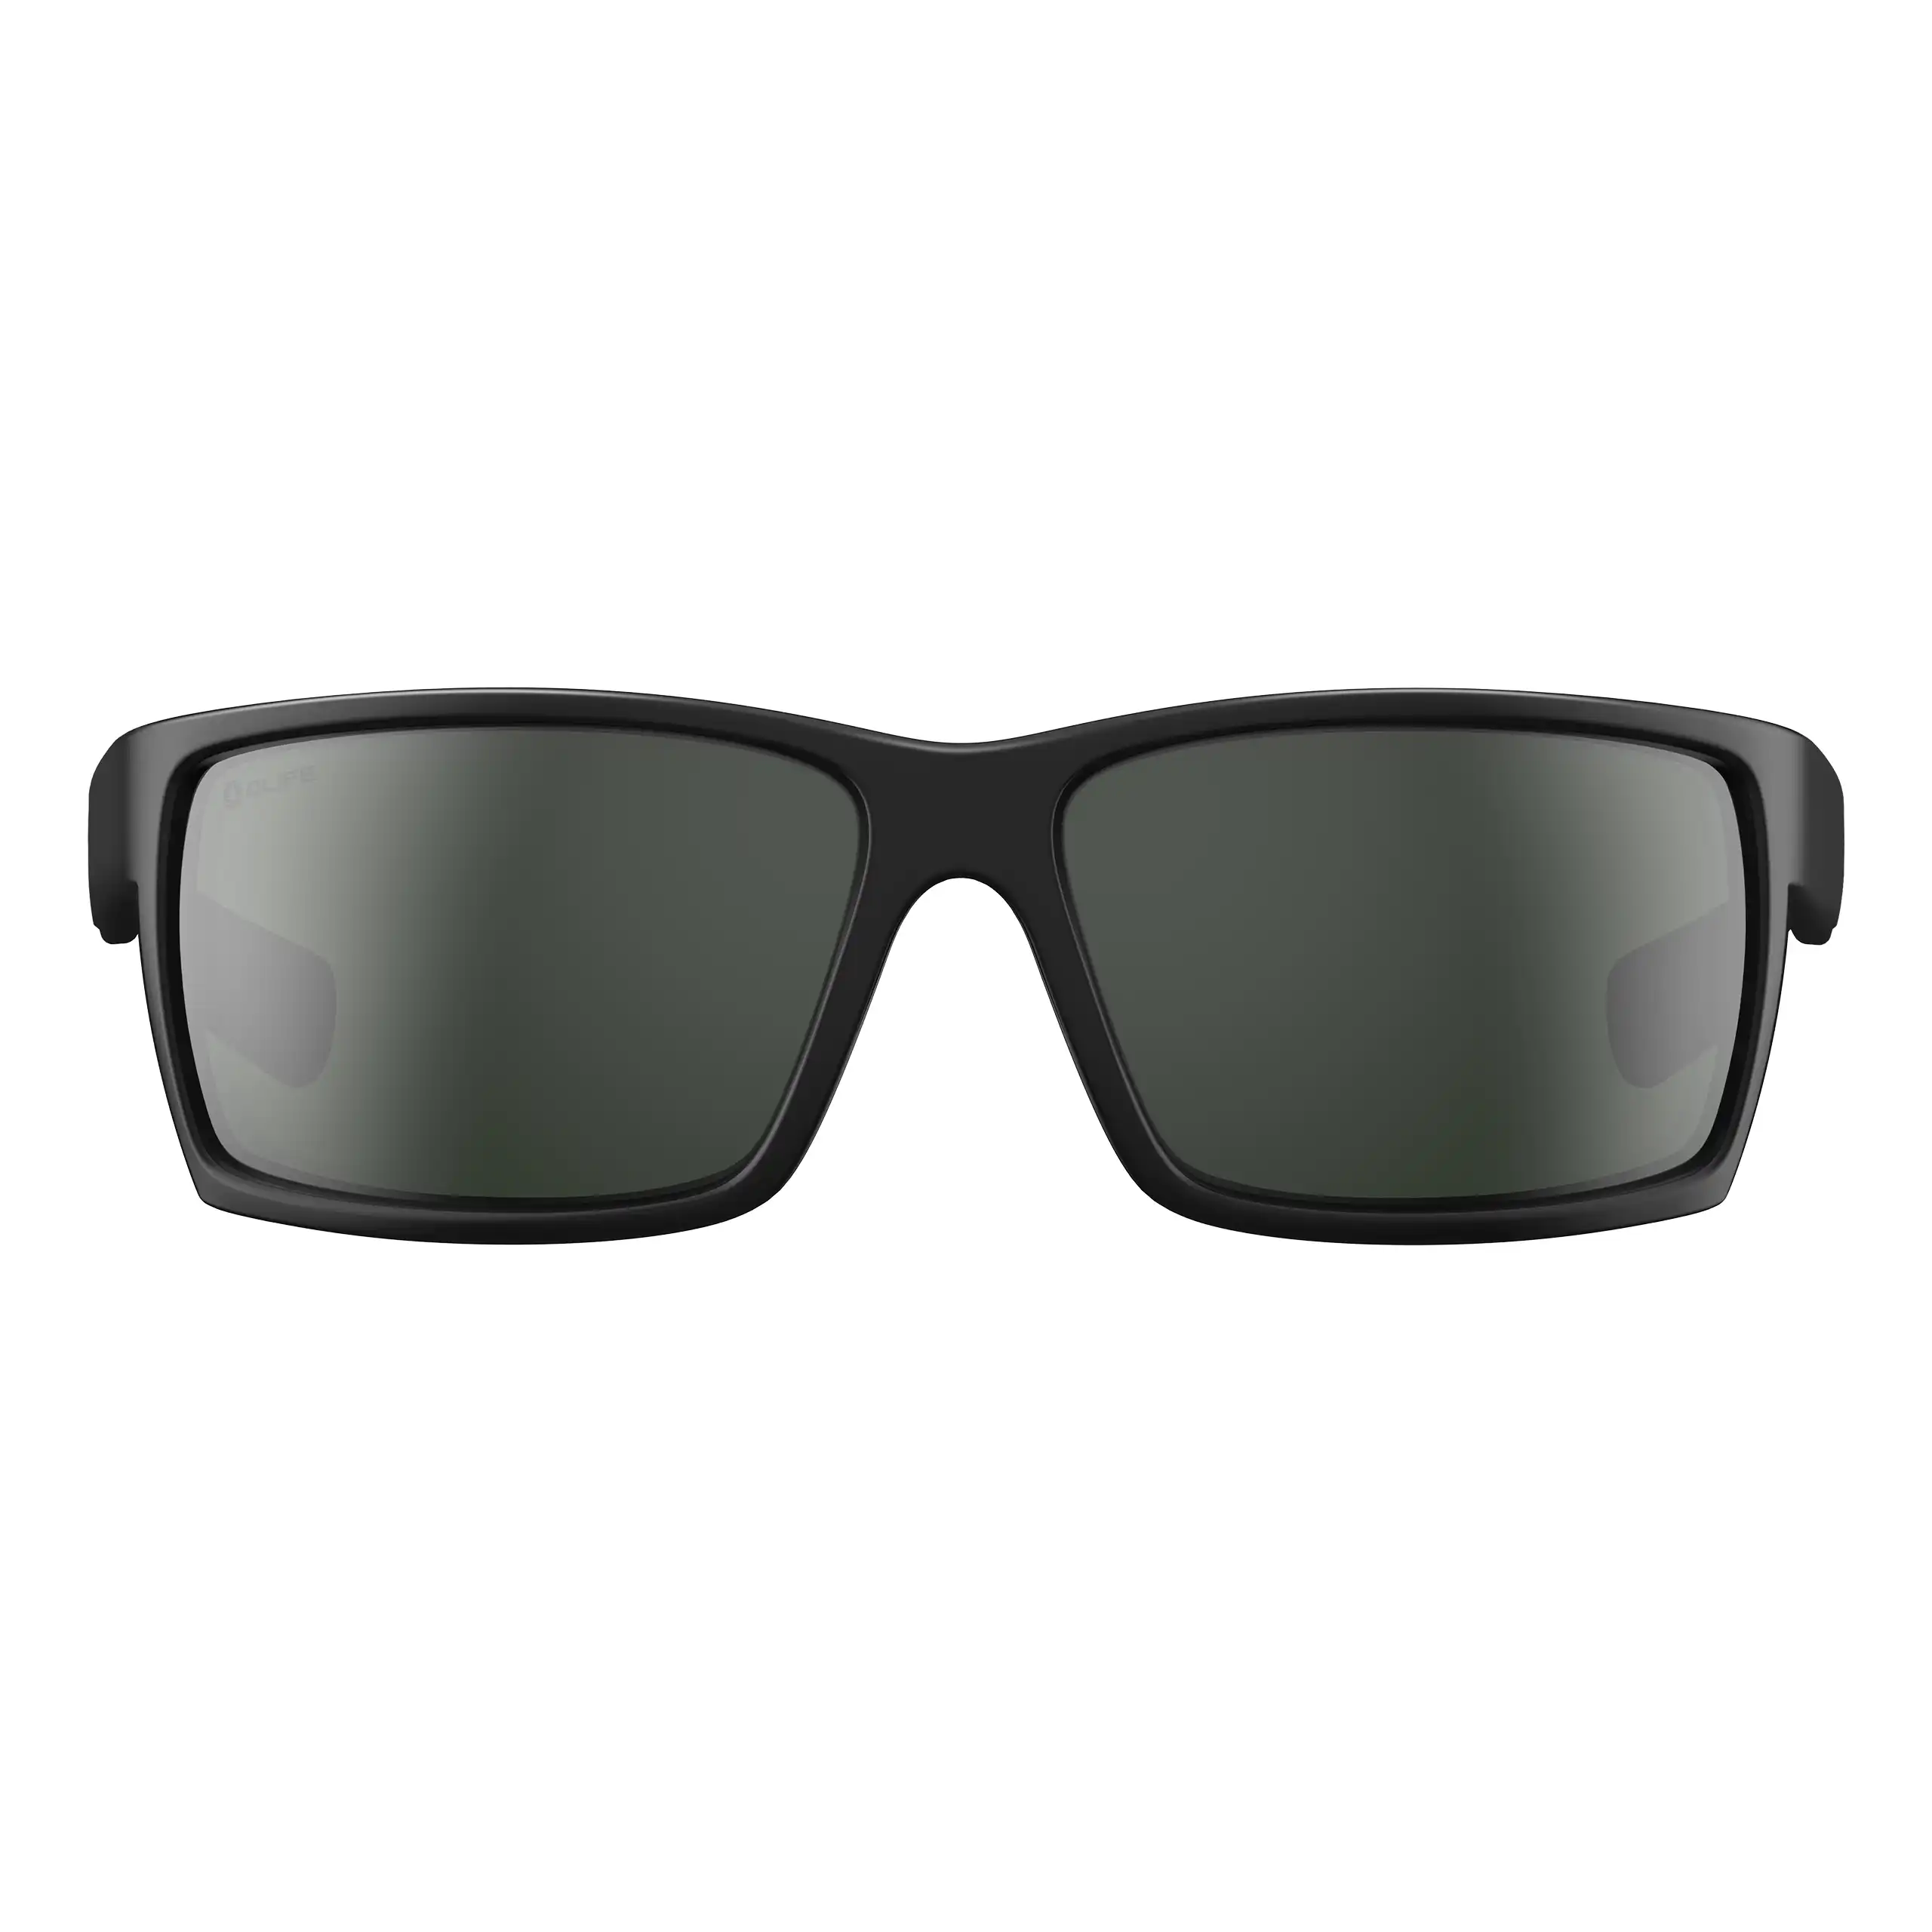 OLIFE Archamp Men's Polarized Casual Sunglasses